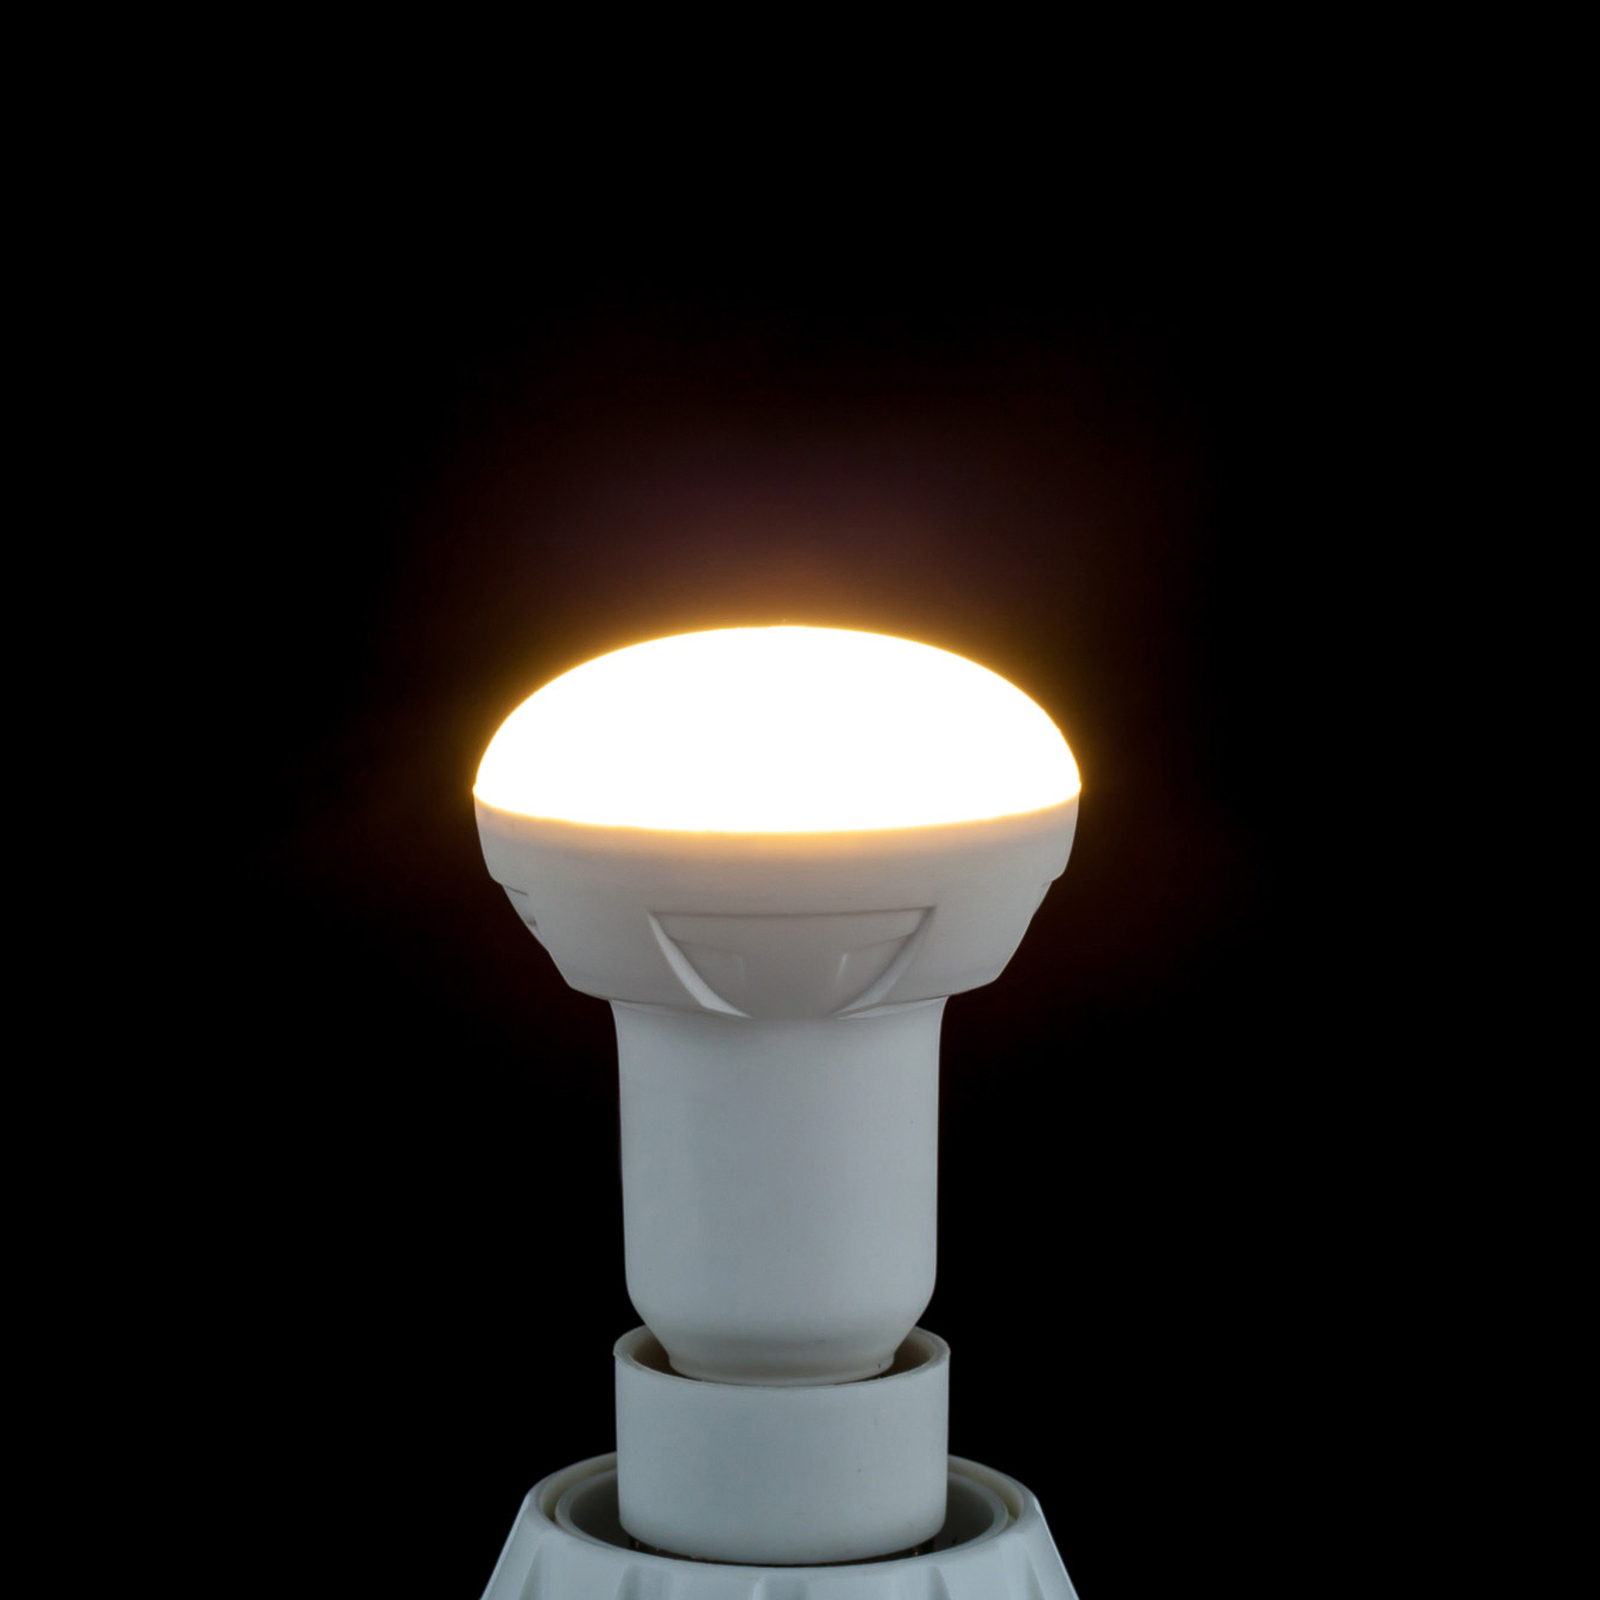 LED-Reflektorlampe R50 E14 4,9W 830 120° 3er-Set